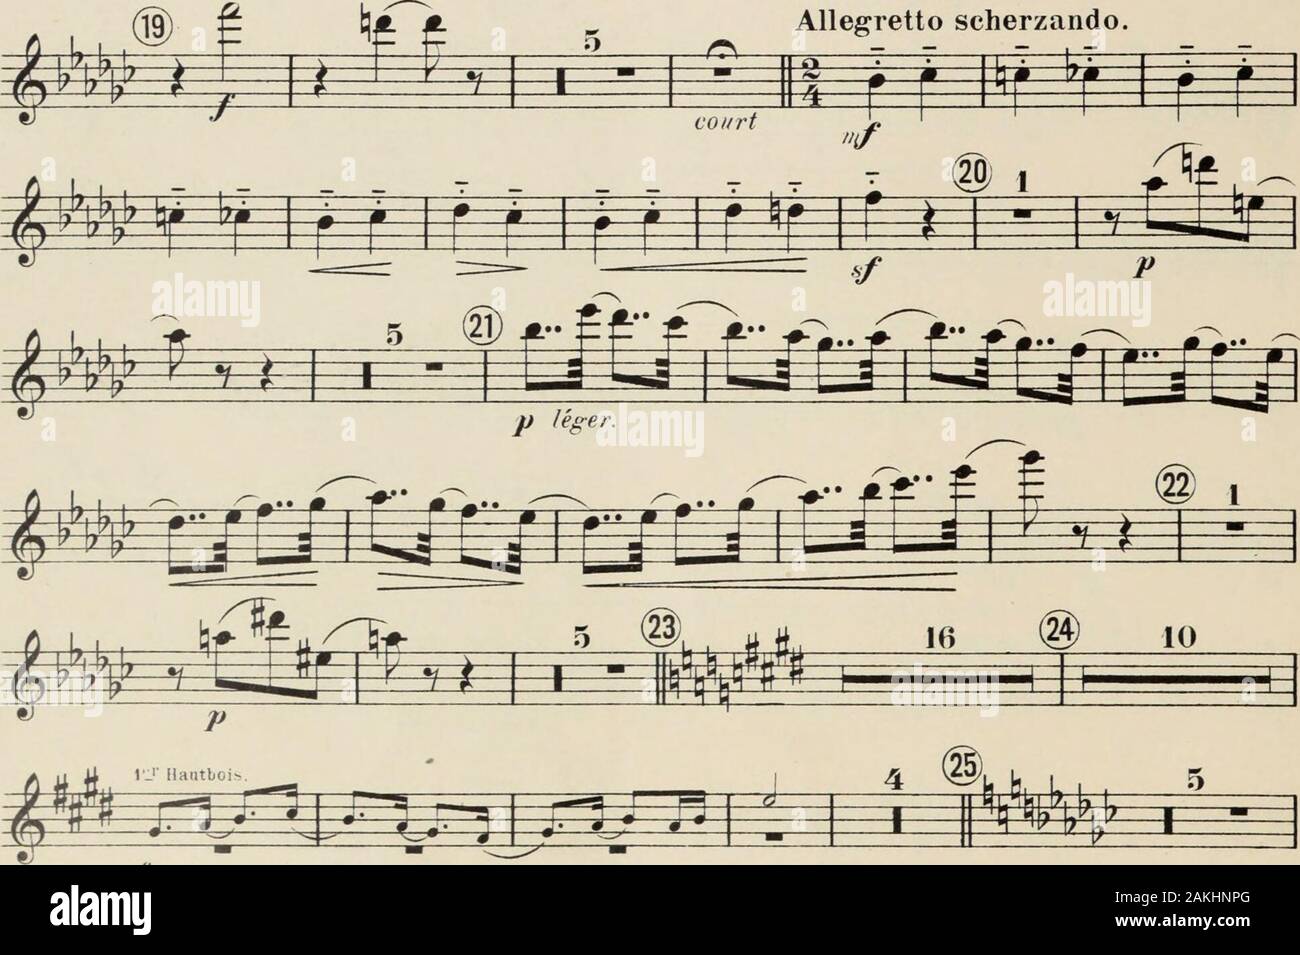 Concertstück pour harpe (ou piano) et orchestre, op39 . pen dehors Allegretto seherzando.. nif i Hpr J. 4787. H. leJLe grande Flute. Listesso (J = J) ^ £* fe * ? *